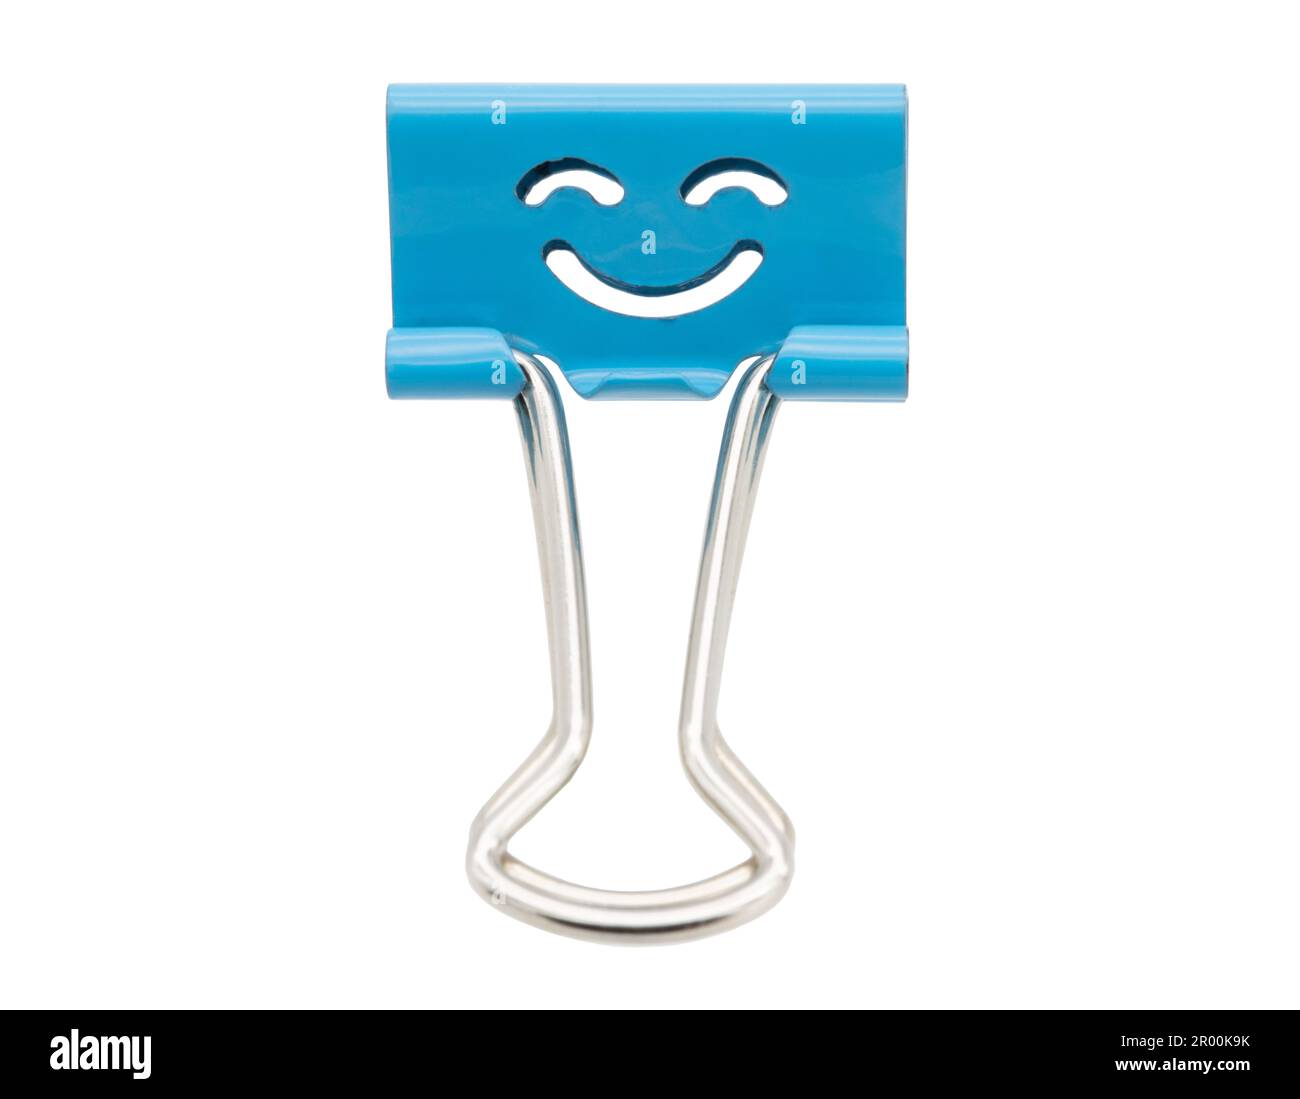 Smile blue binder clip isolated on white background Stock Photo